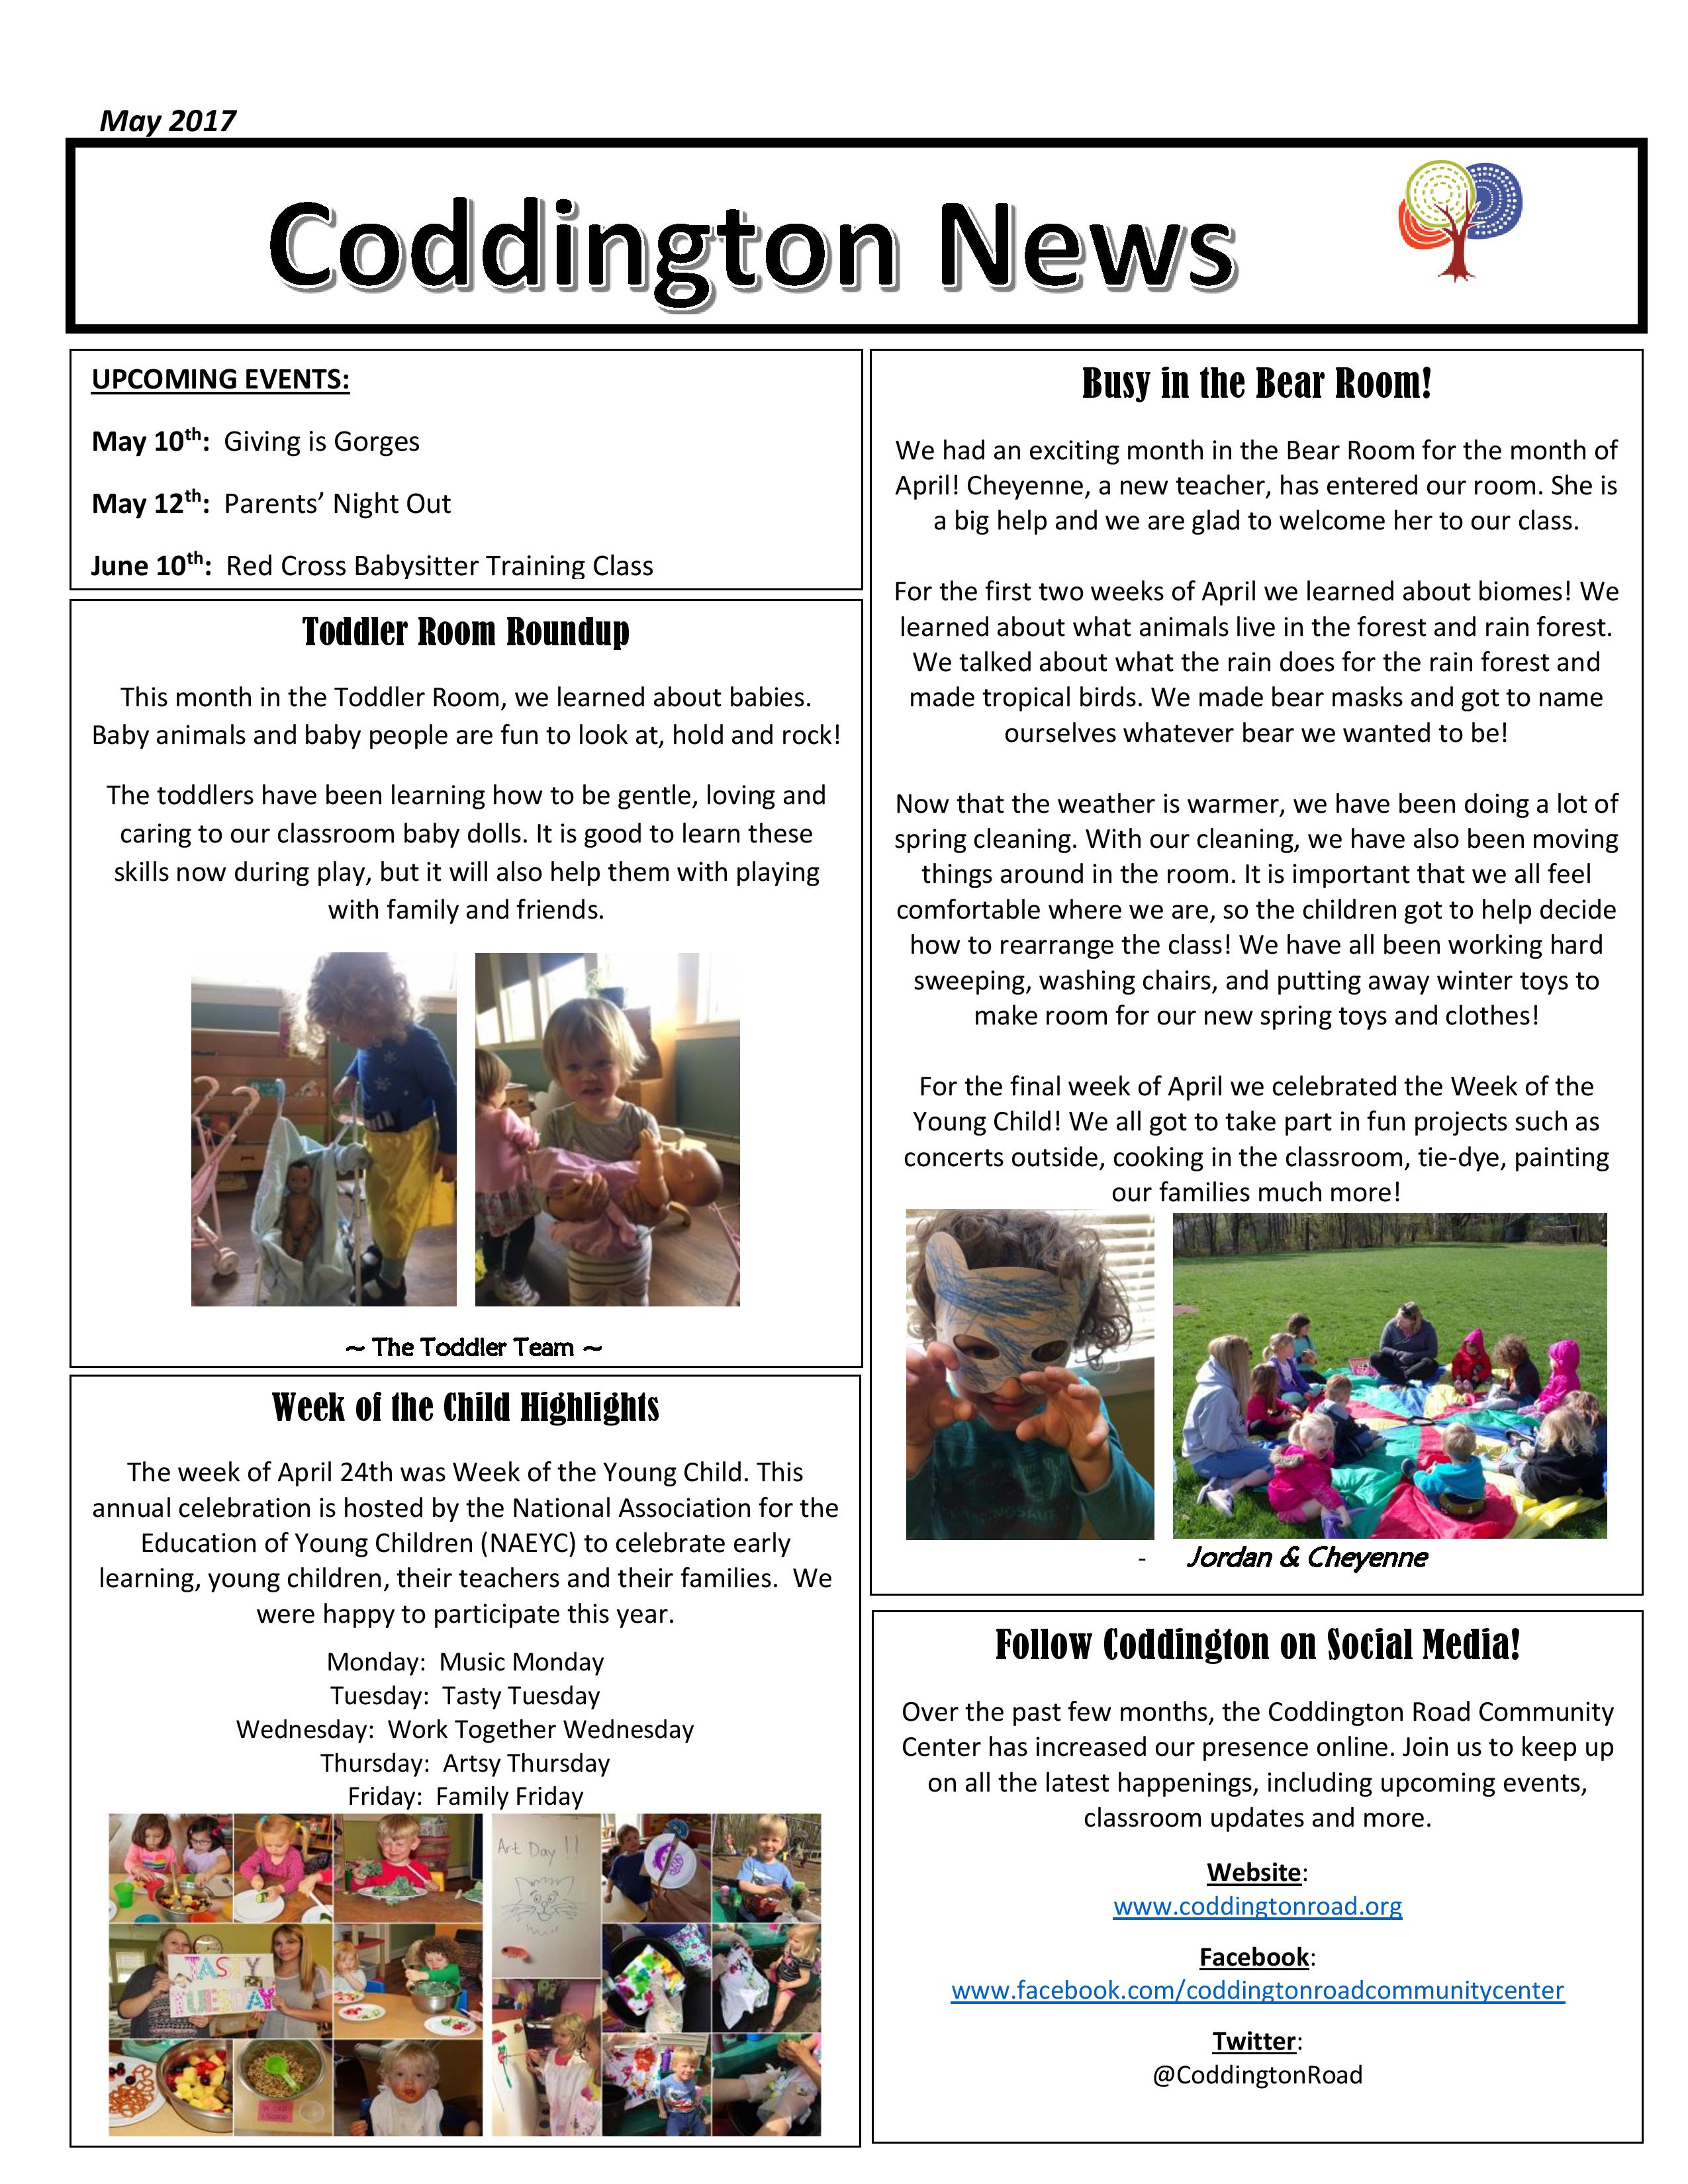 May 2017 Coddington Road Community Center in Ithaca NY newsletter